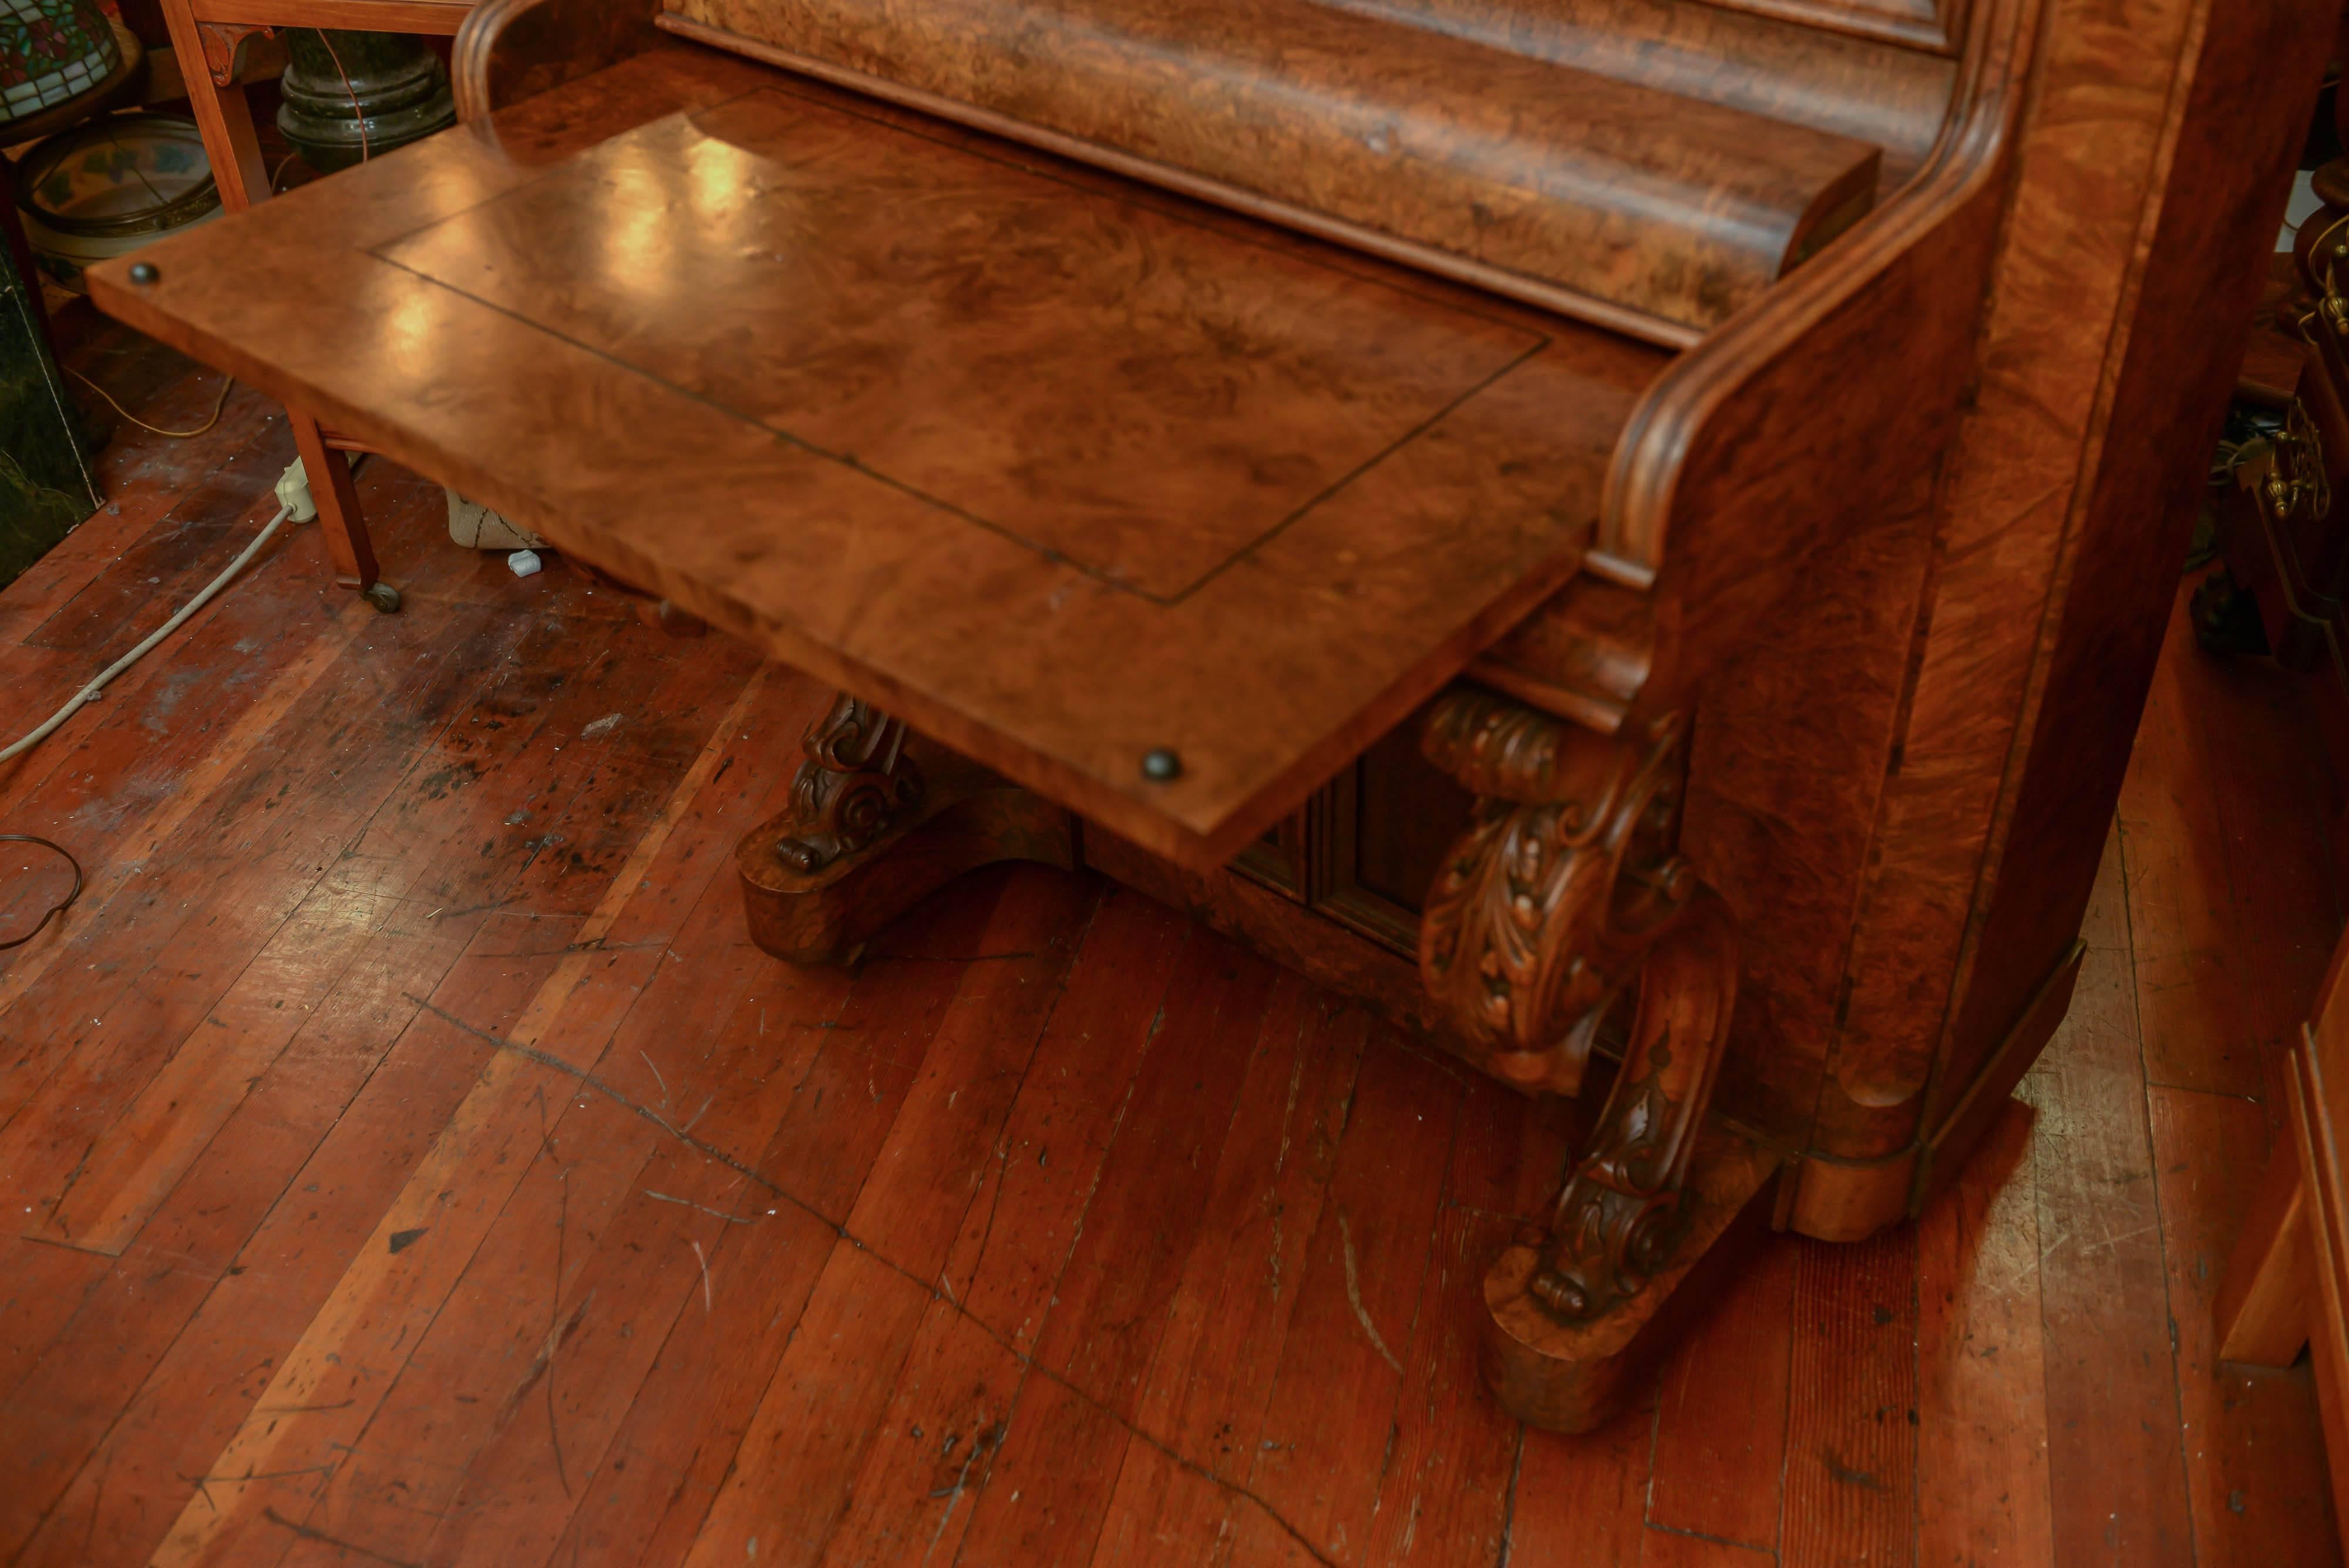 Rococo Revival 19th Century Burled Walnut Spinet Desk